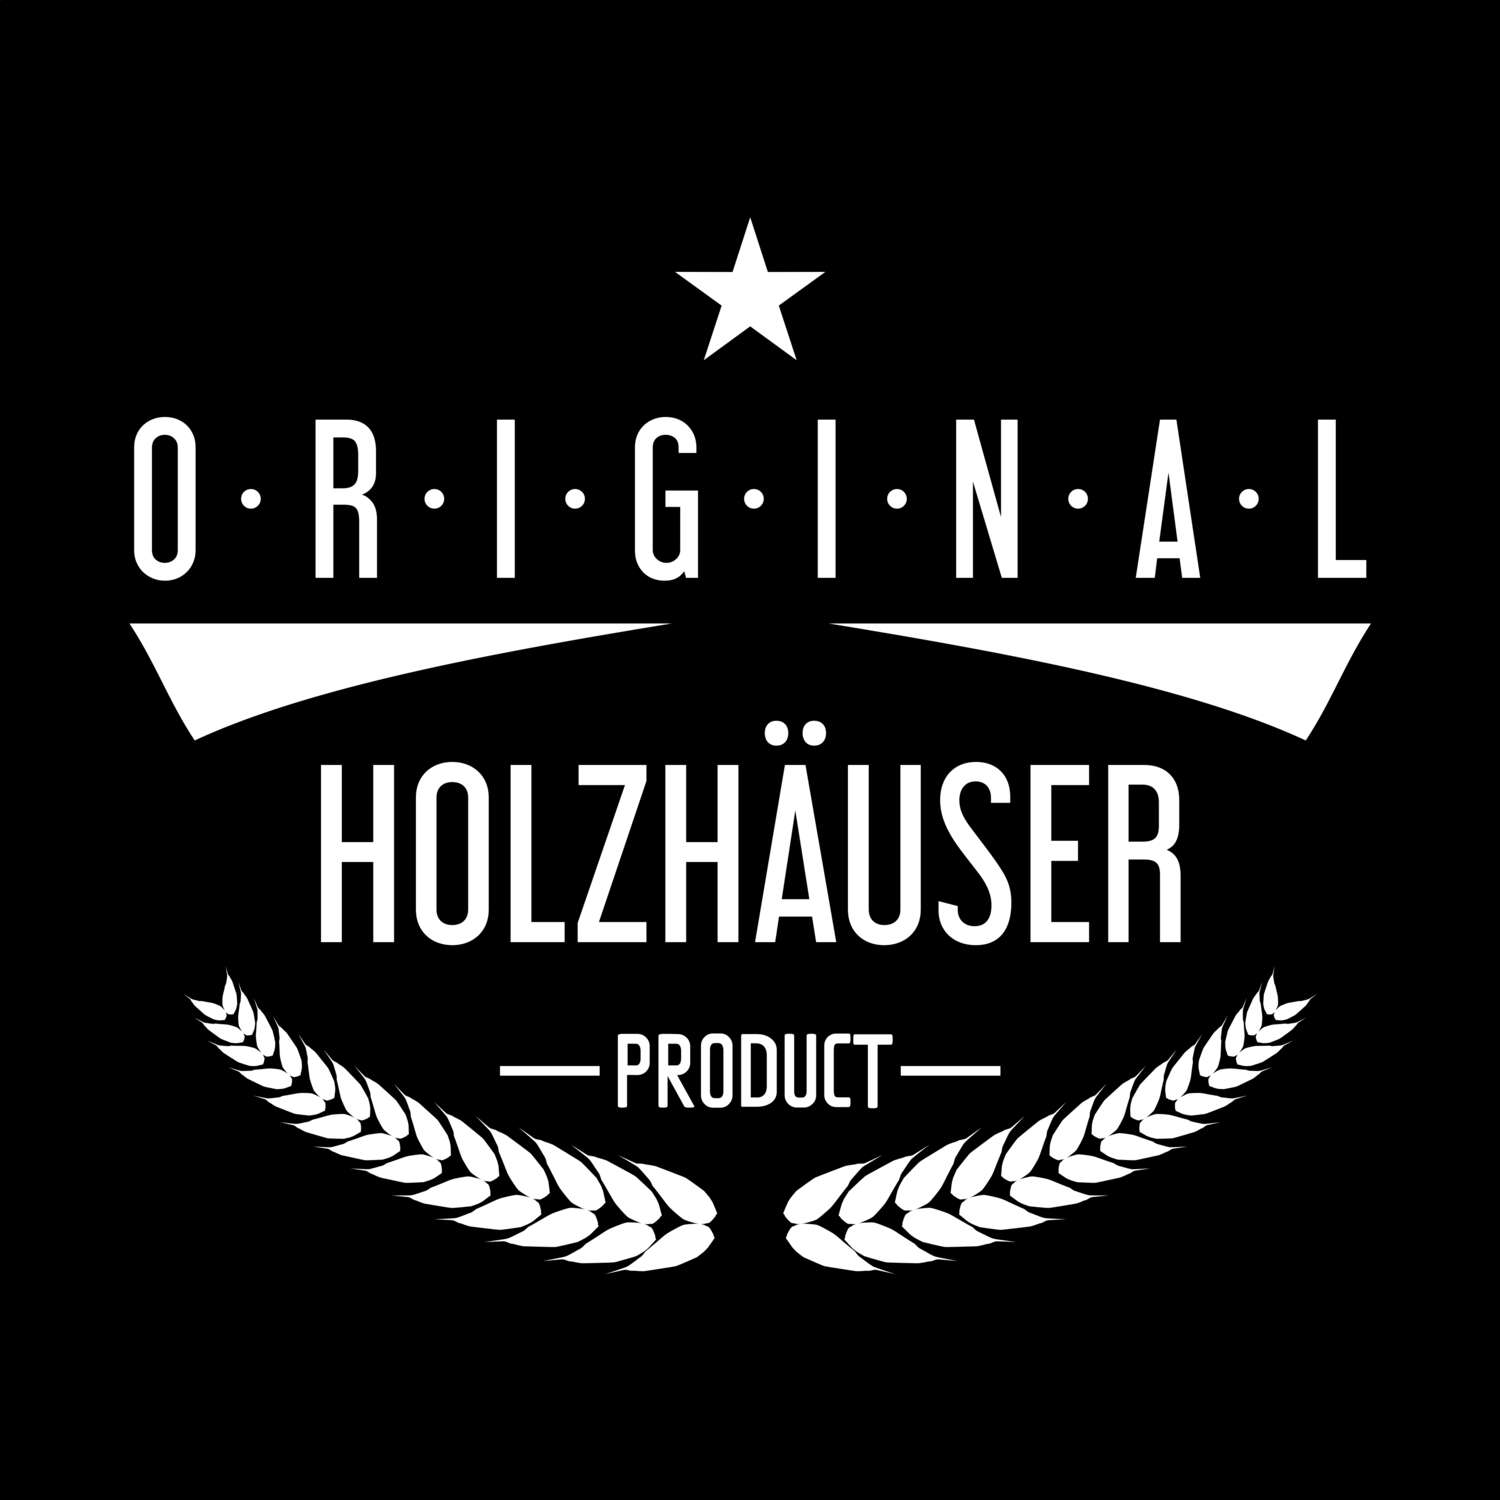 Holzhäuser T-Shirt »Original Product«